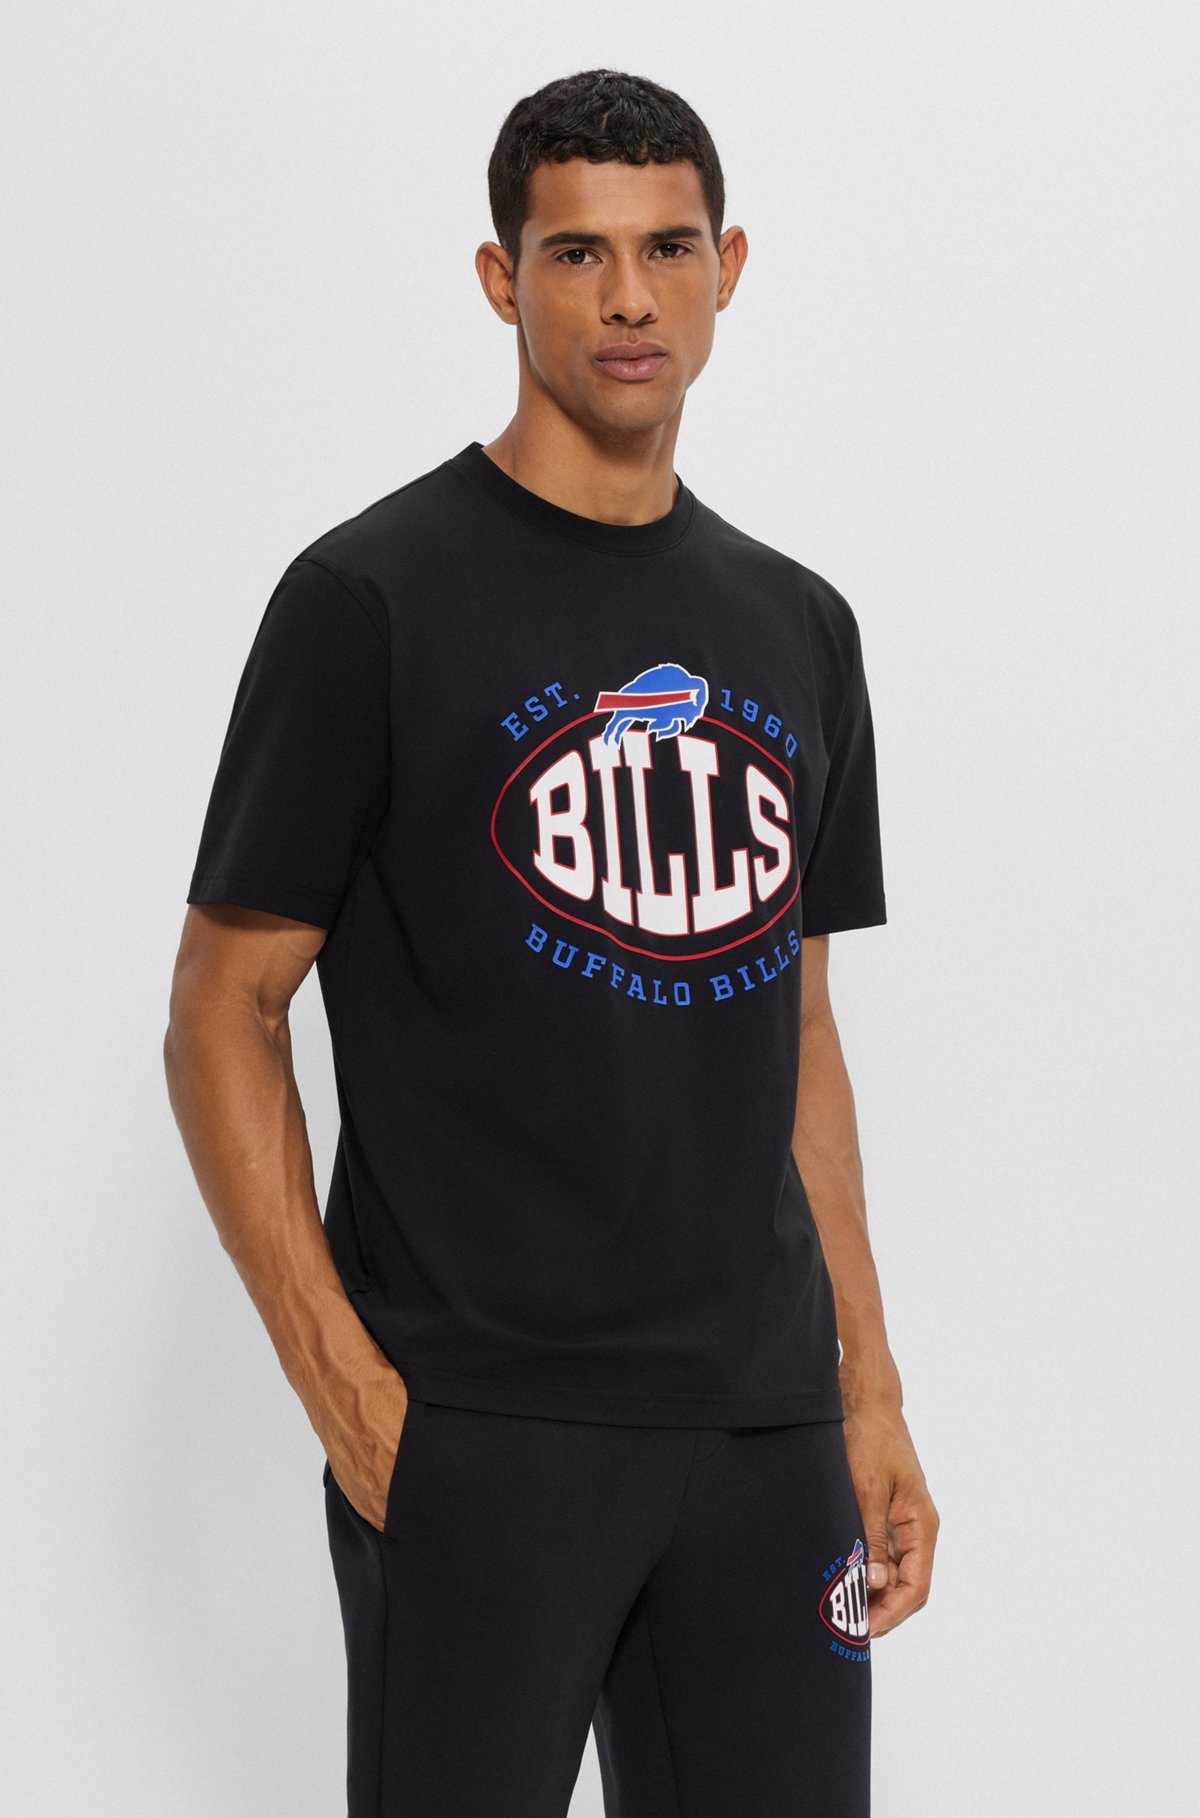  BOSS x NFL stretch-cotton T-shirt with collaborative branding, Bills